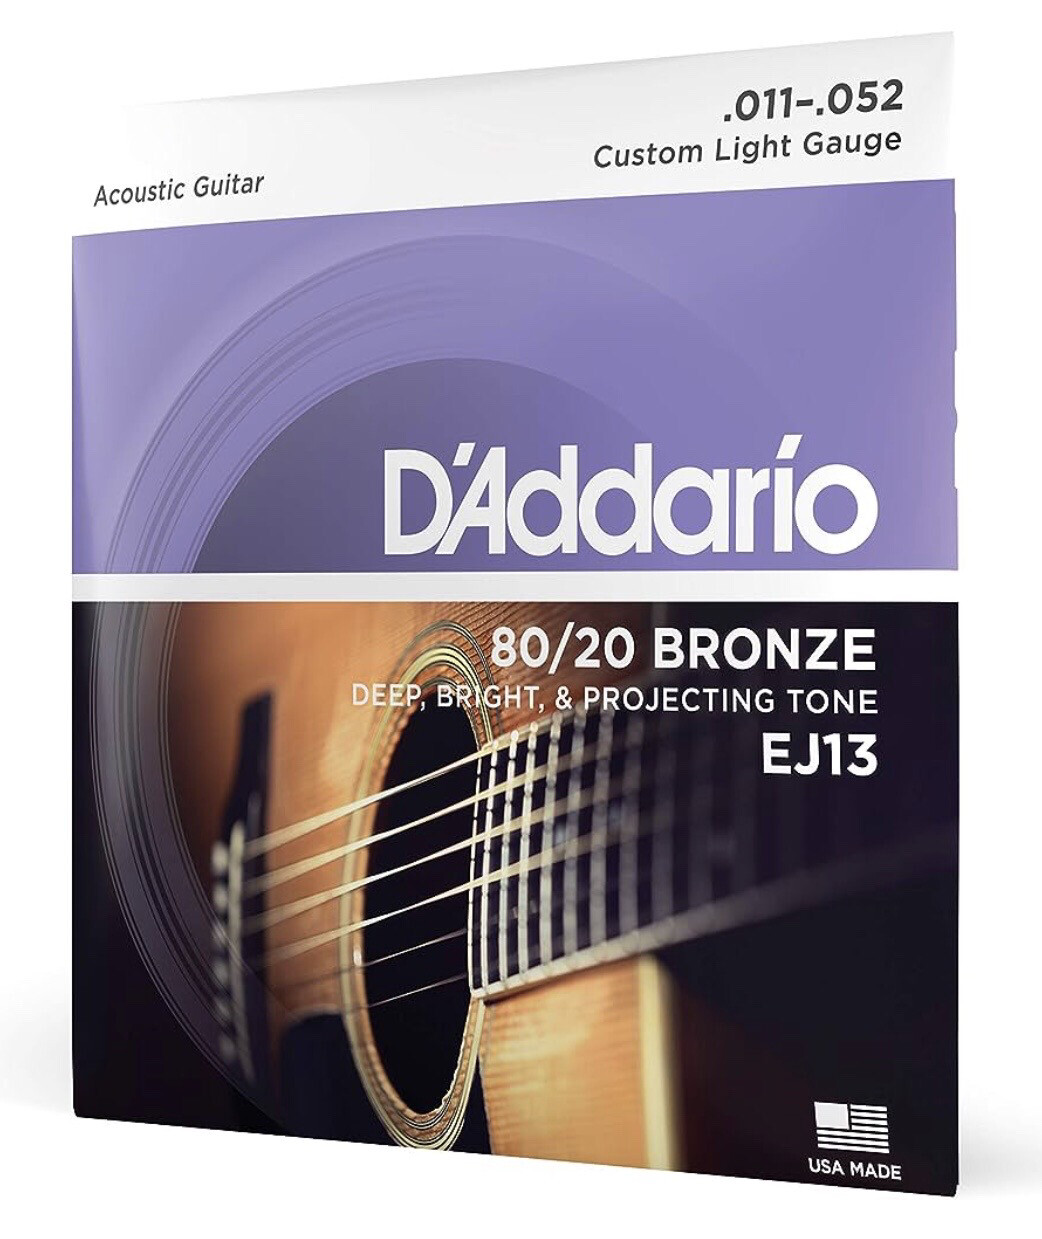 D’Addario 80/20 Bronze Custom Light Gauge Acoustic Guitar Strings EJ13